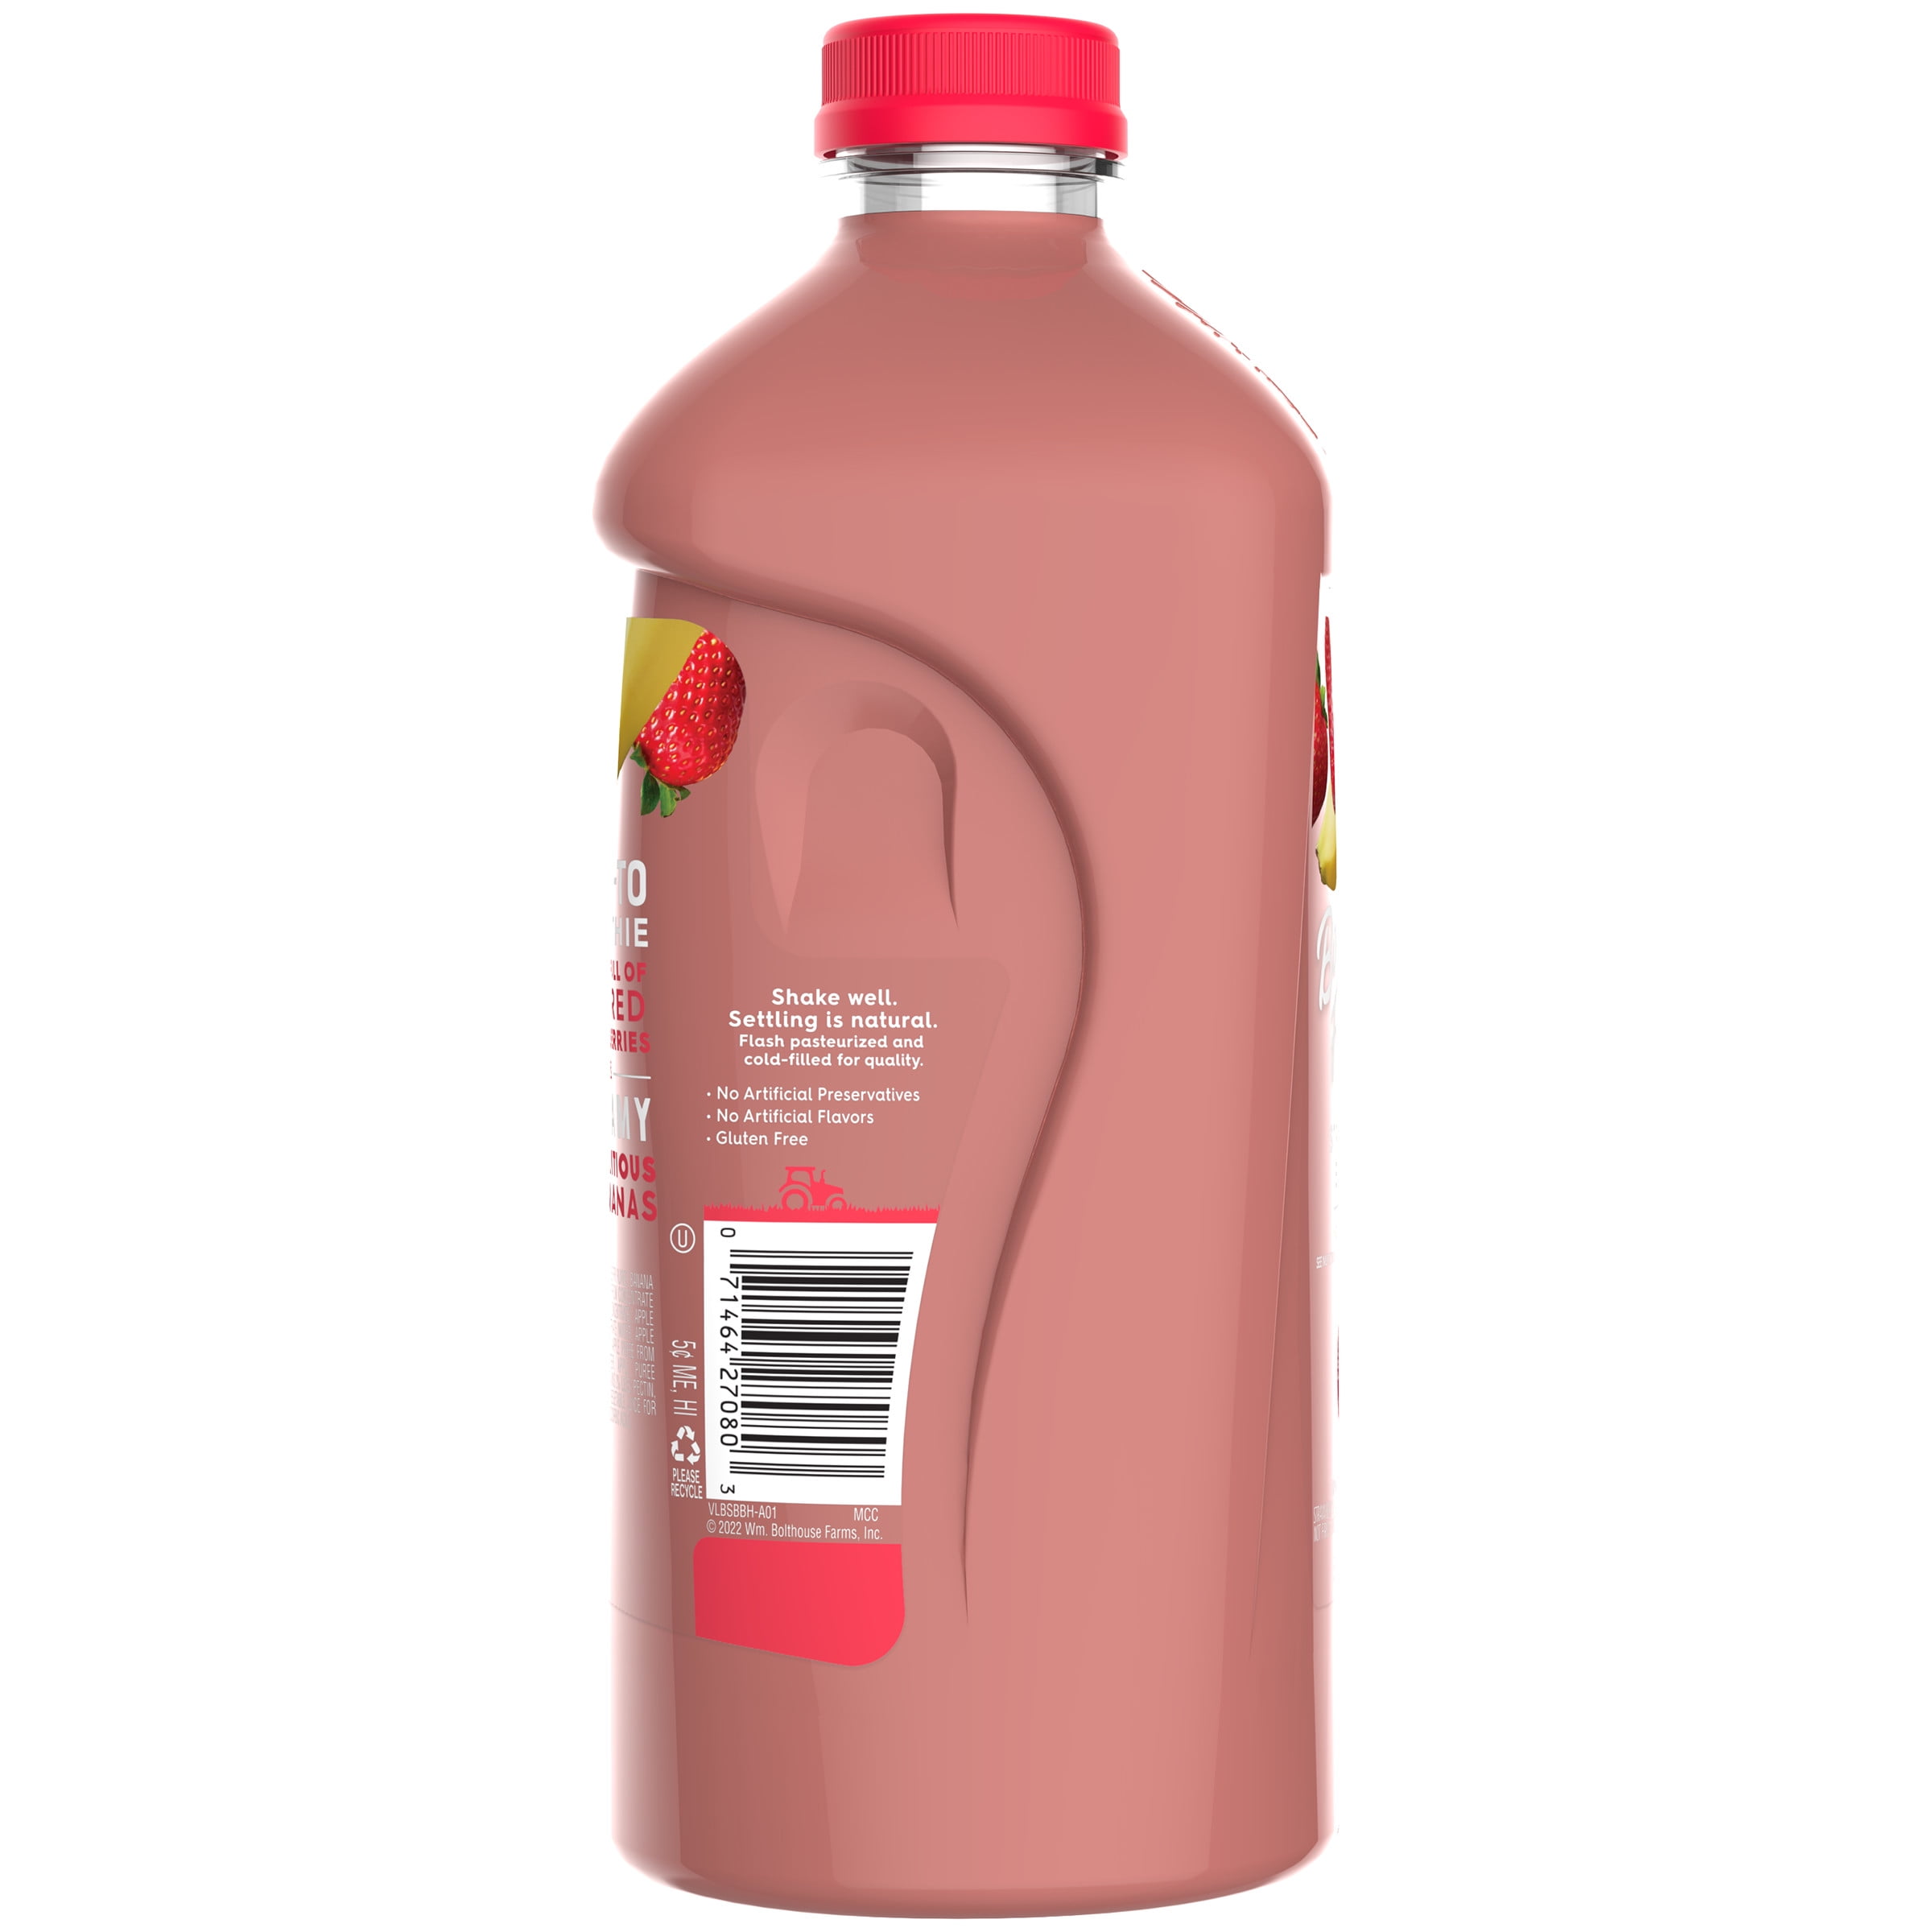 Innocent Smoothie Strawberry & Banana (PET bottle) - 8x250ml